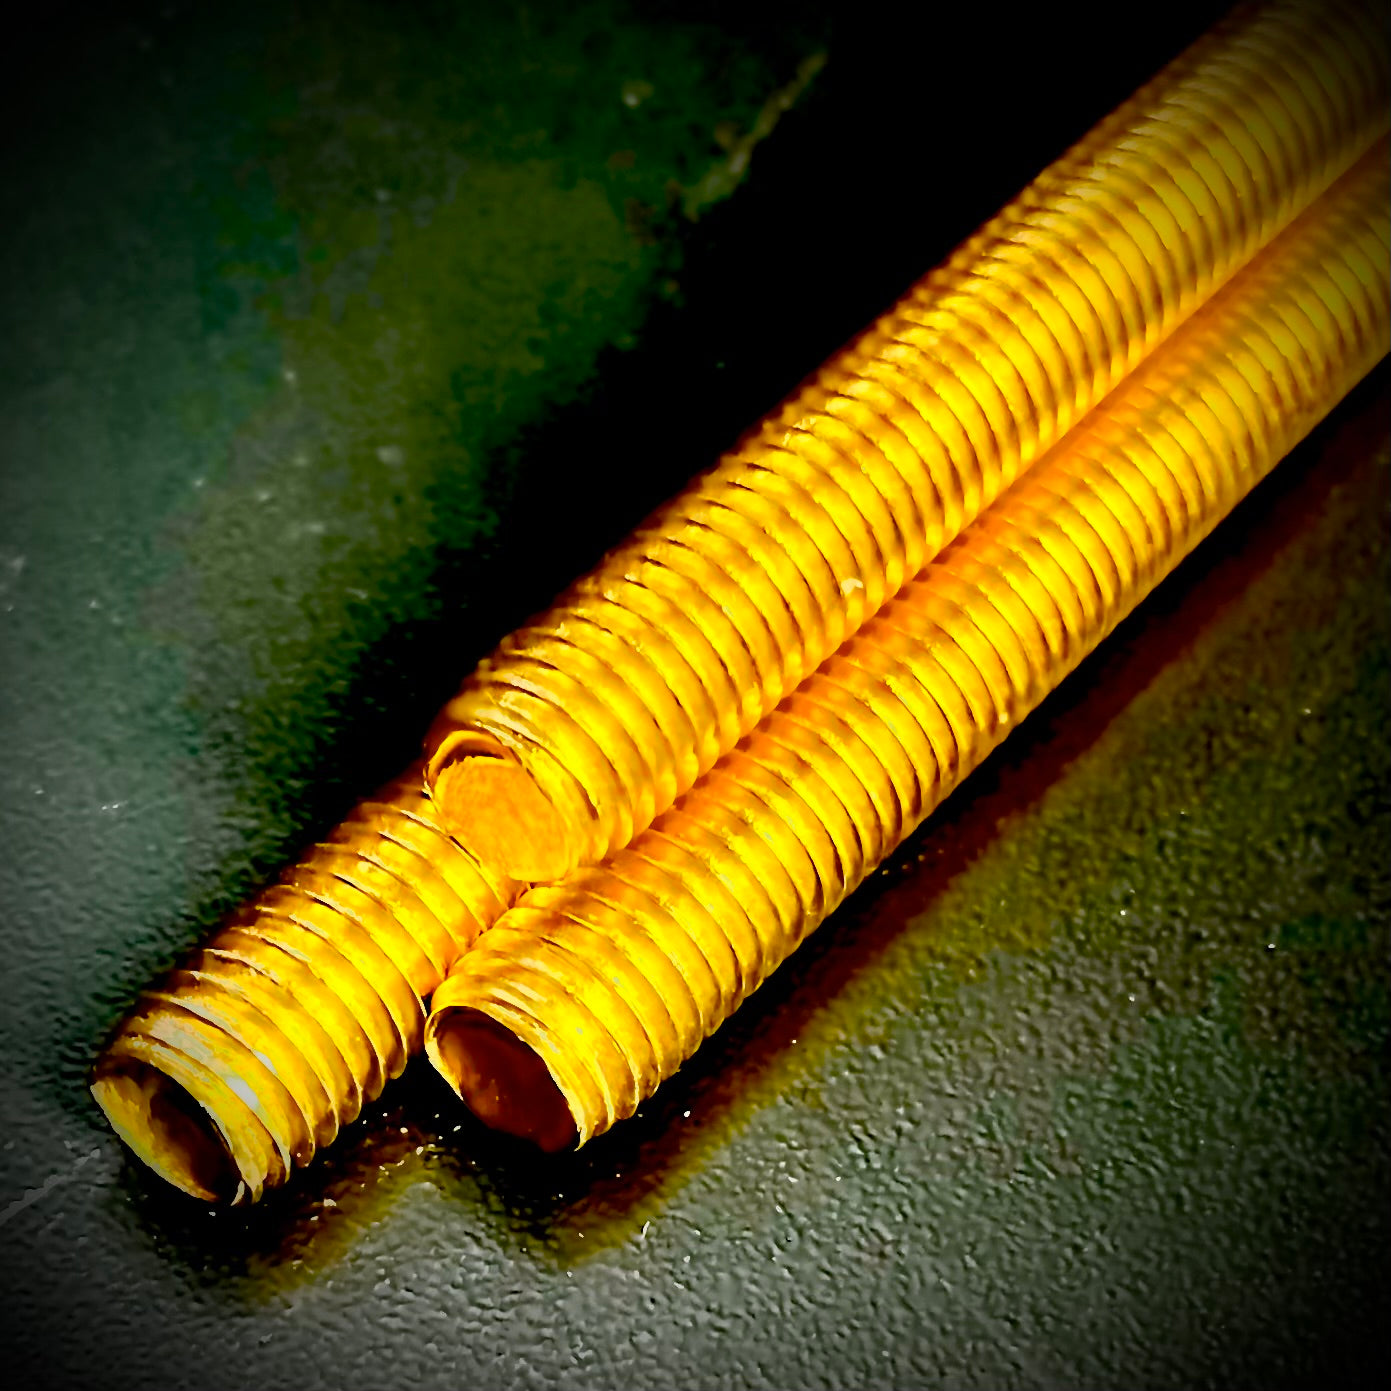 Metric x 500mm Solid Brass All Thread Bar Stud Rod DIN 975 - Fixaball Ltd. Fixings and Fasteners UK